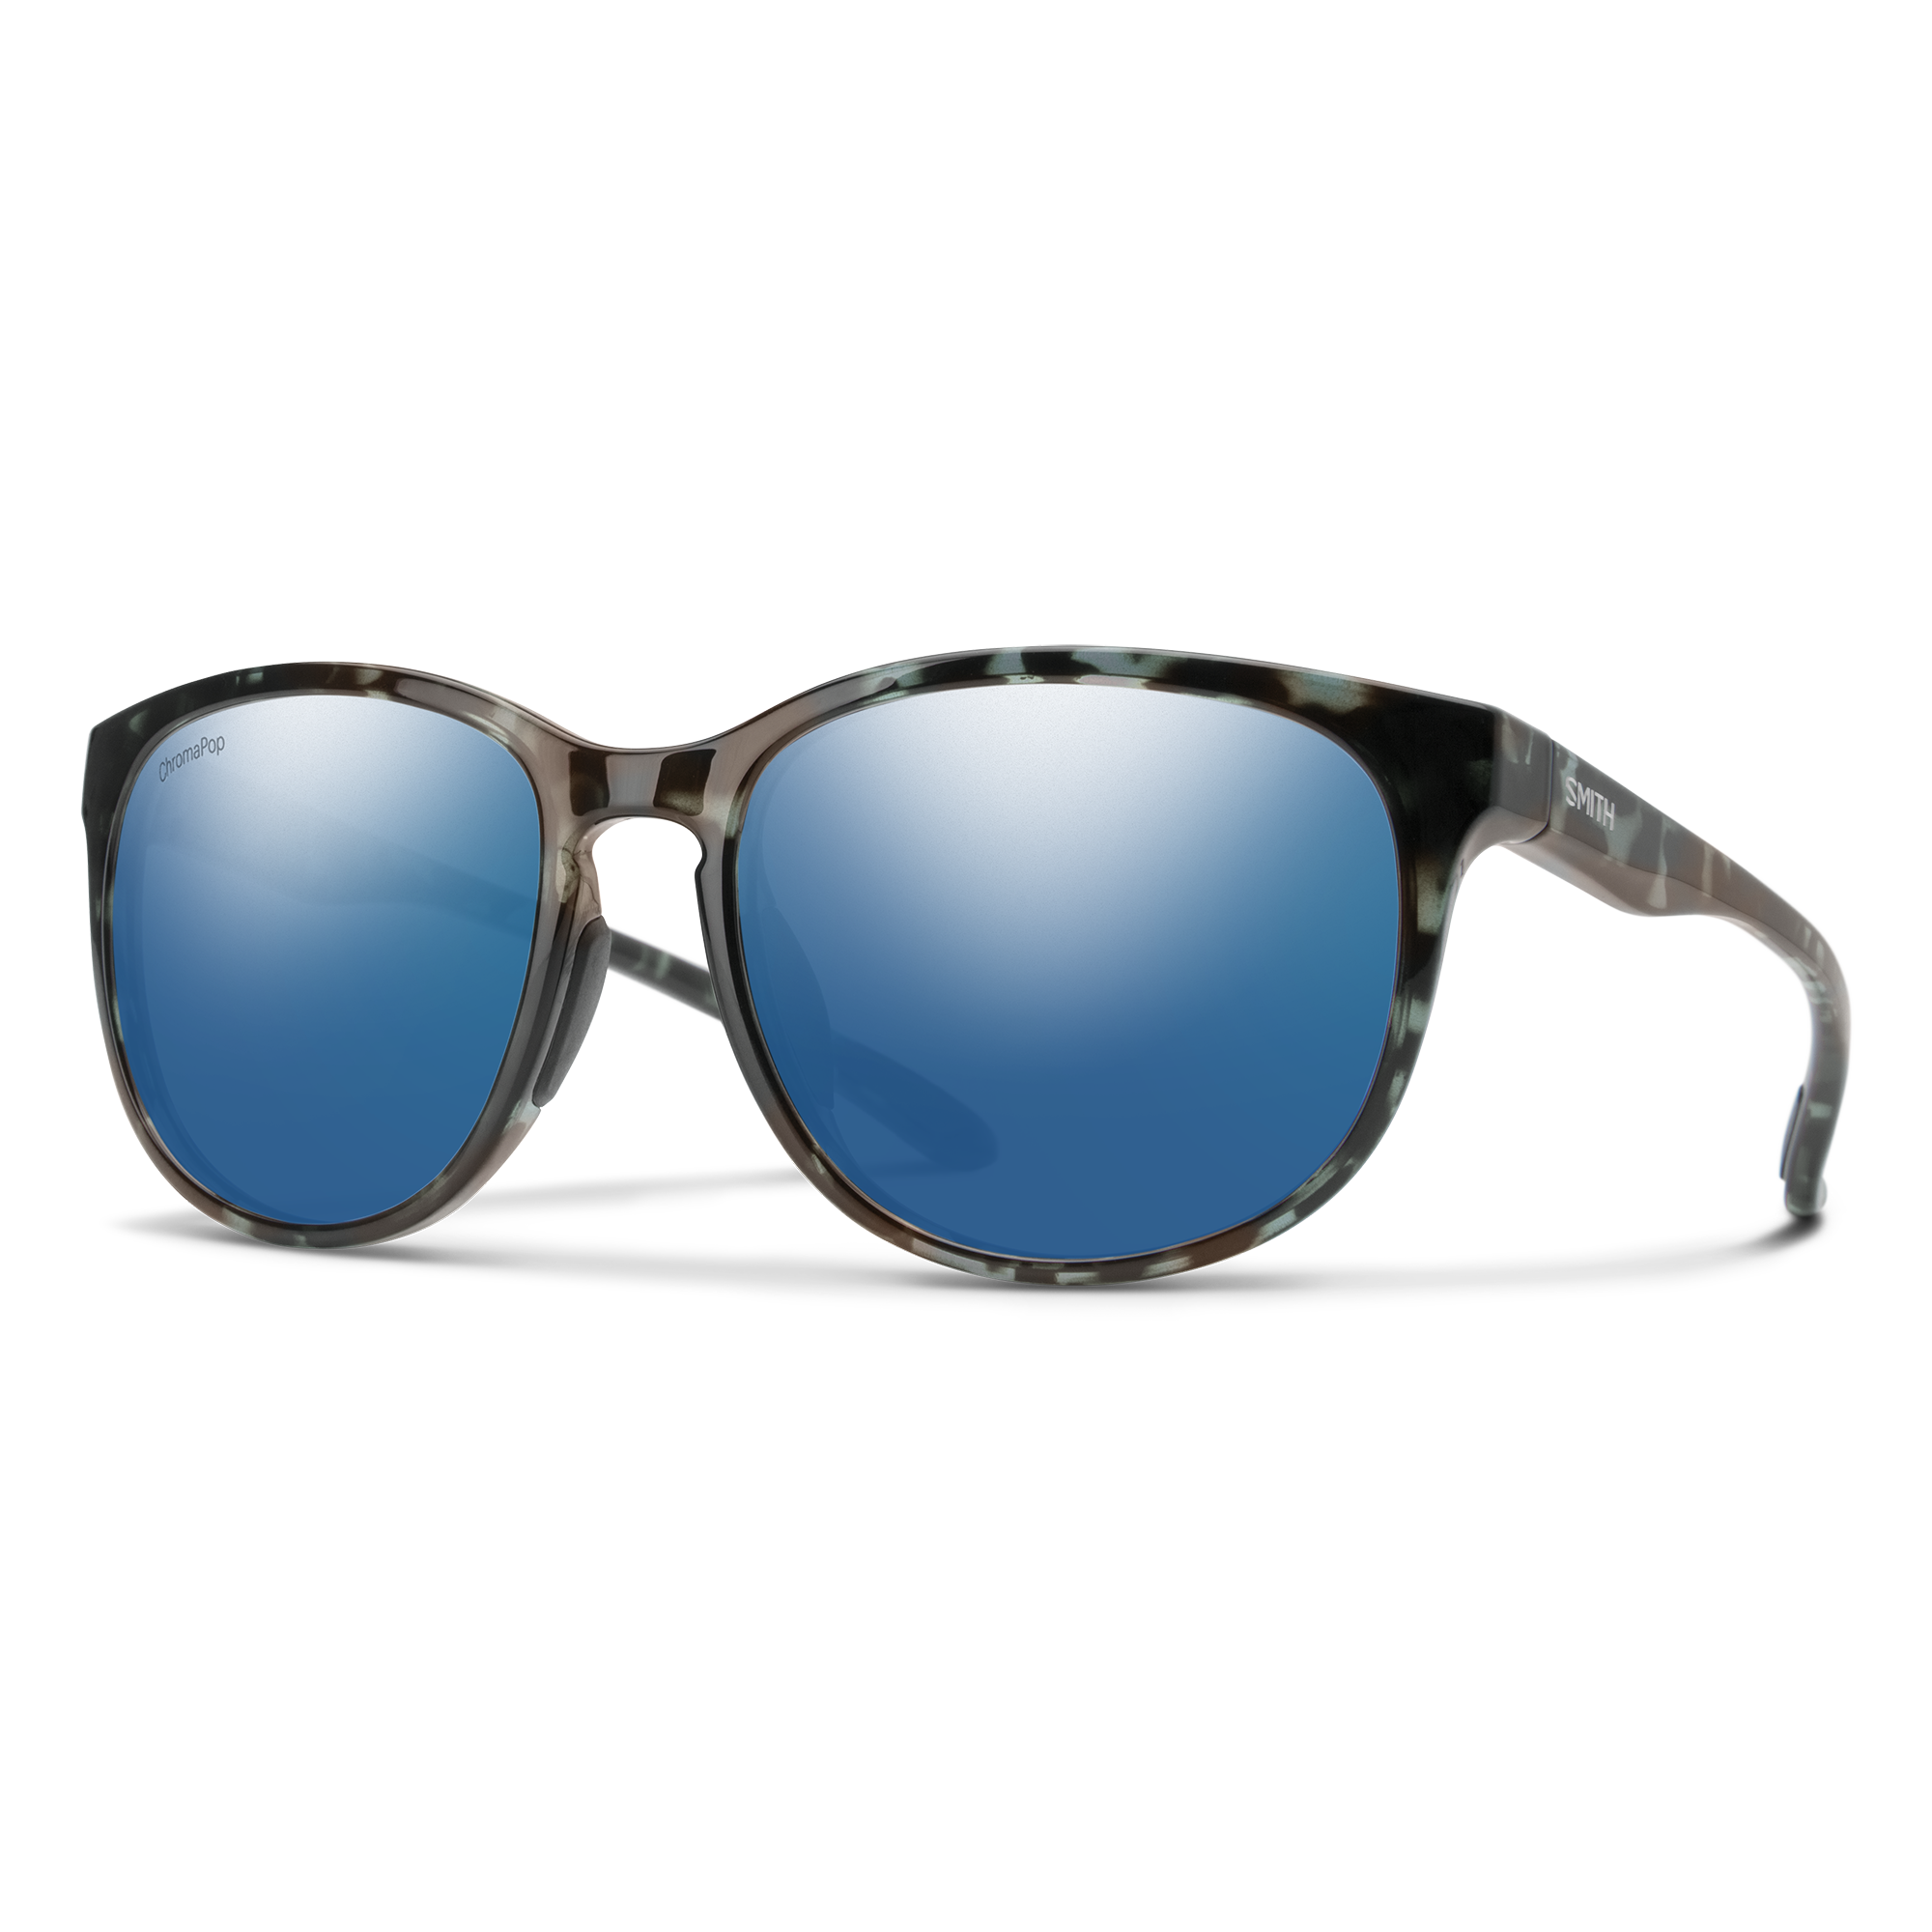 Shop Keytar Crystal/Blue Vintage Sports Sunglasses for Women